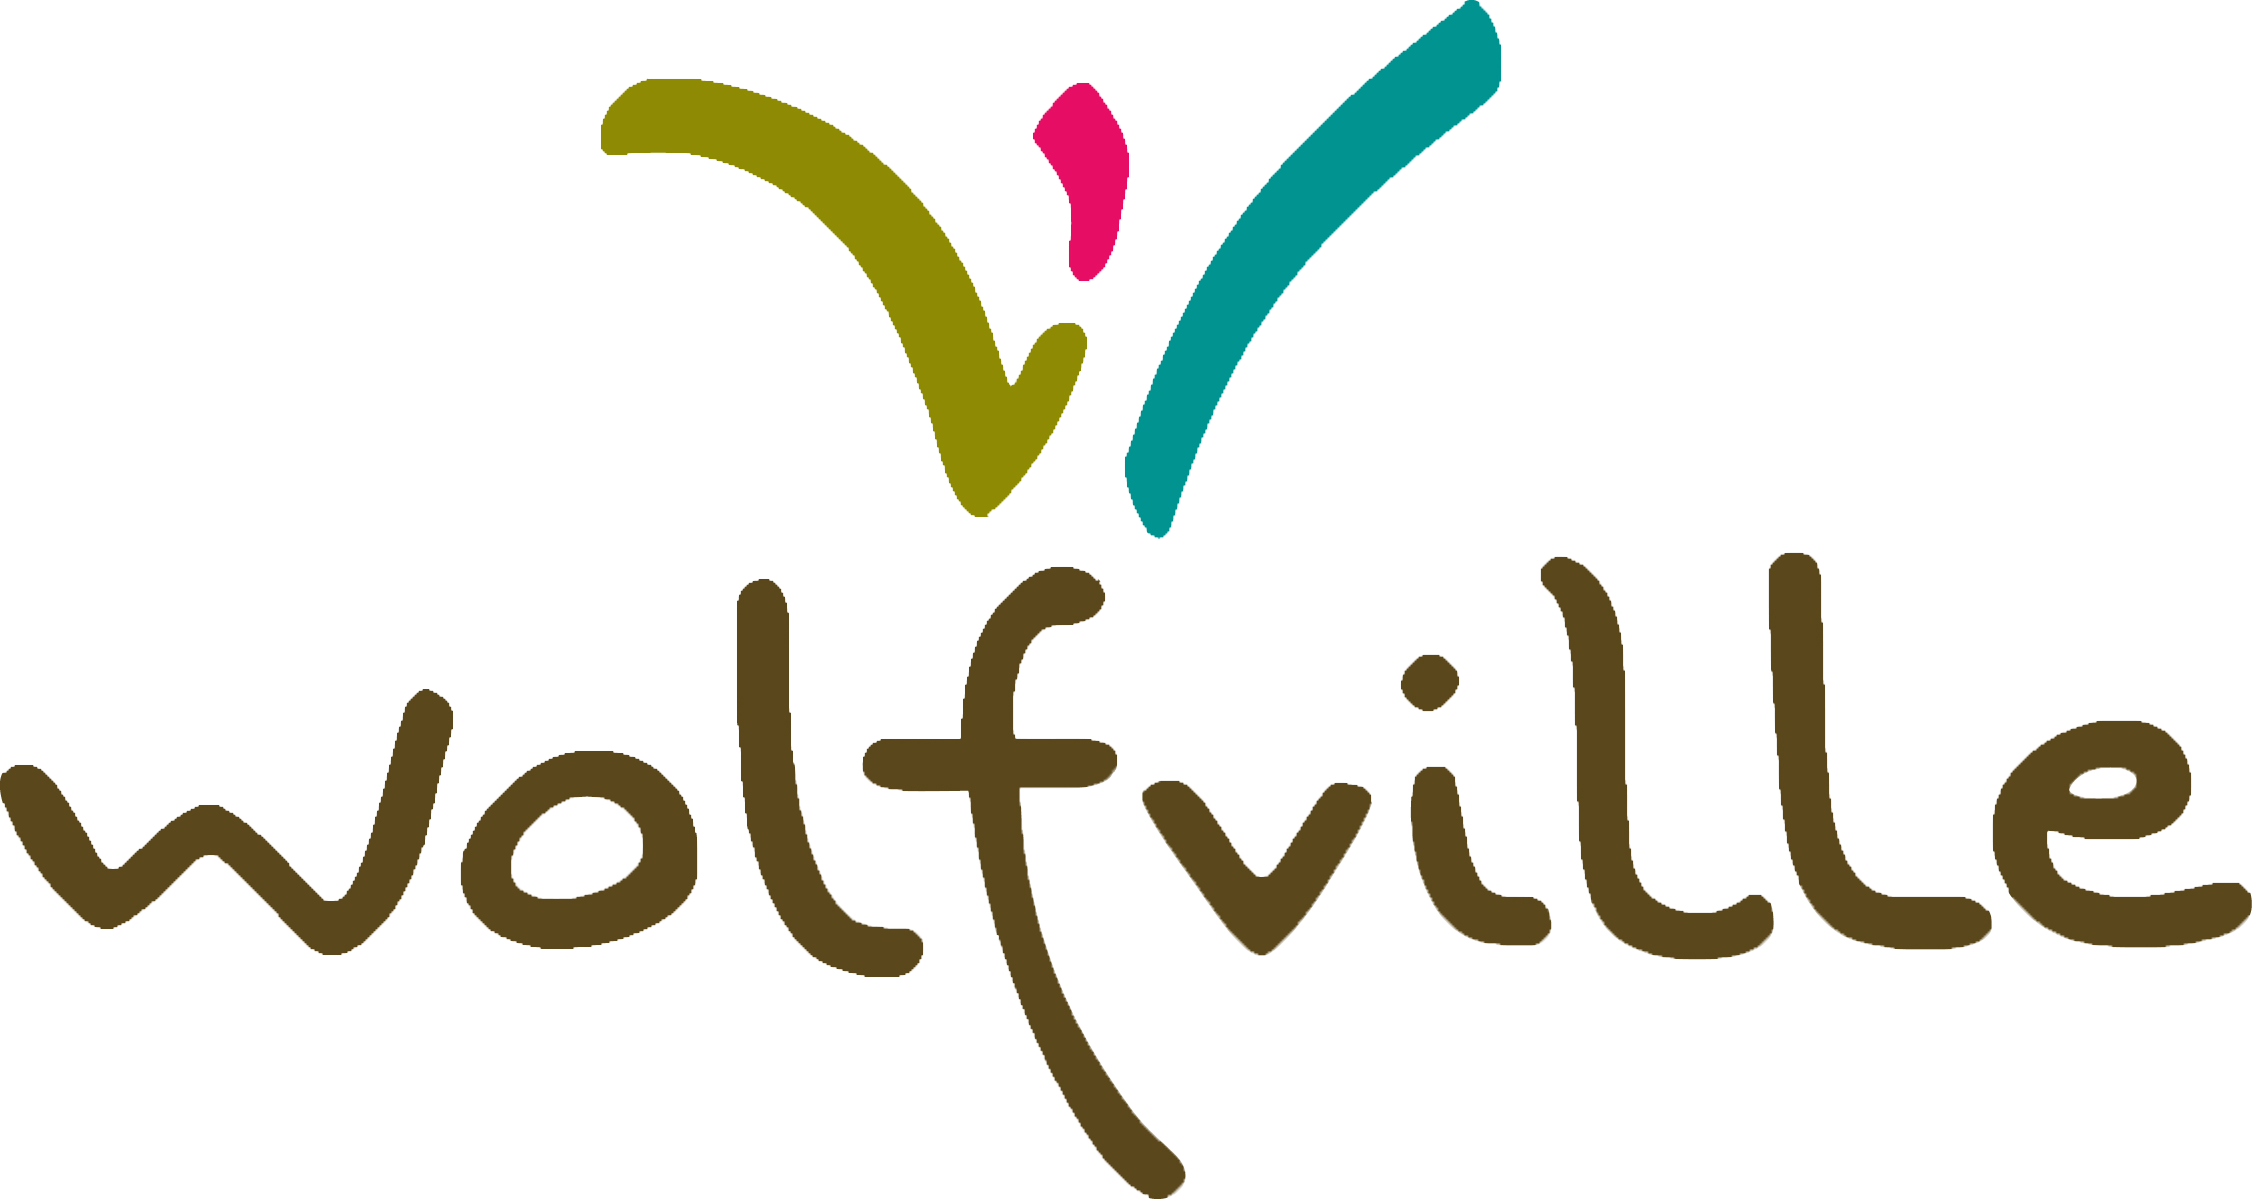 logo Wolfville transparent background